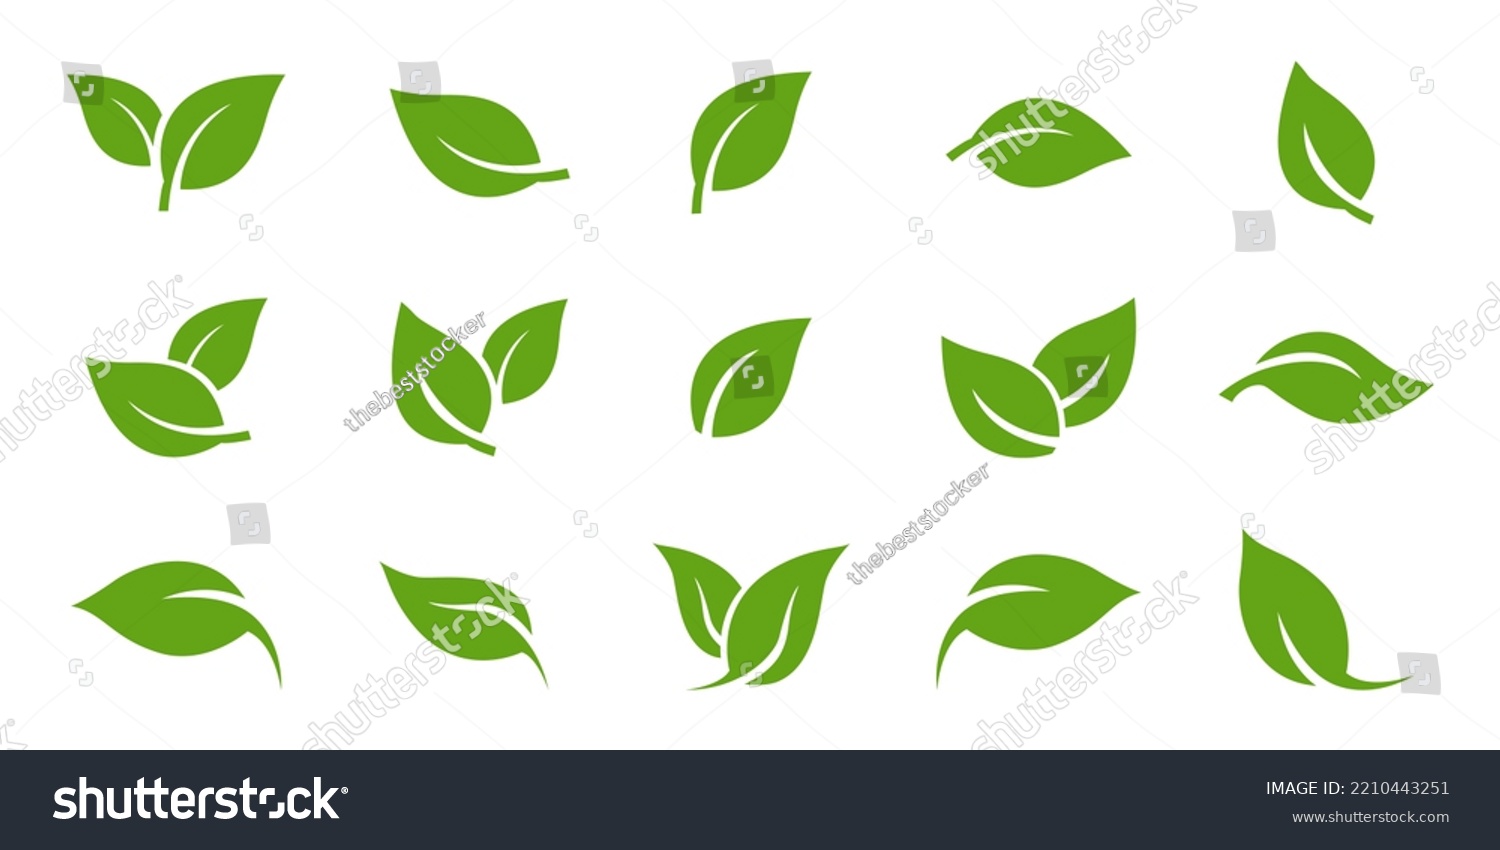 SVG of Green leaf icons set. Leaves icon on isolated background. Collection green leaf. Elements design for natural, eco, vegan, bio labels. Vector illustration EPS 10 svg